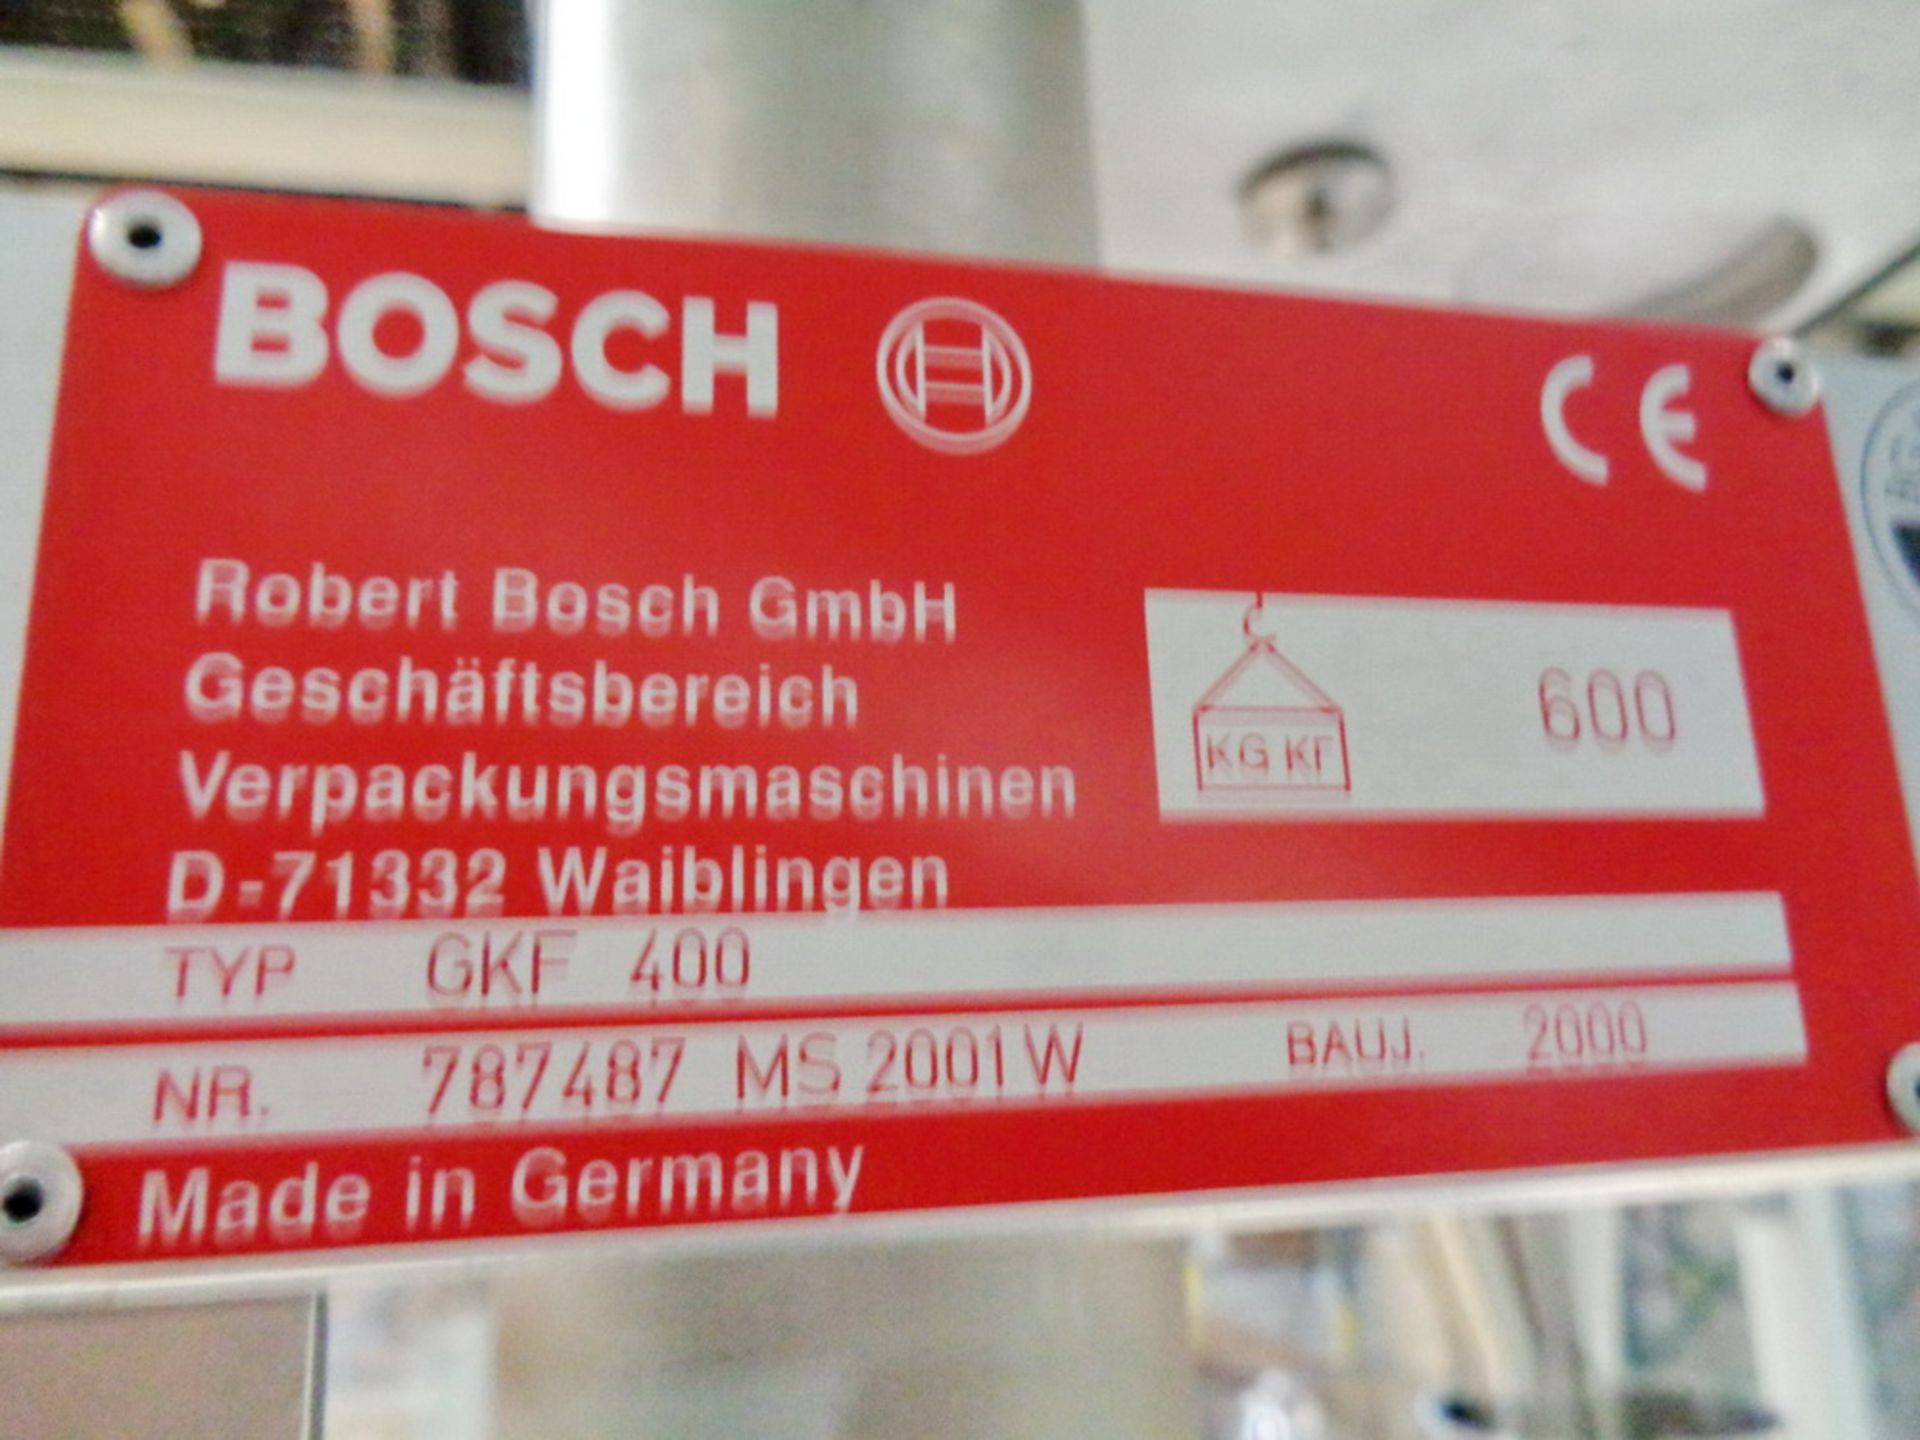 (1) Bosch Capsule Filler, Model GKF400, S/N 787487MS2001W - Image 14 of 18